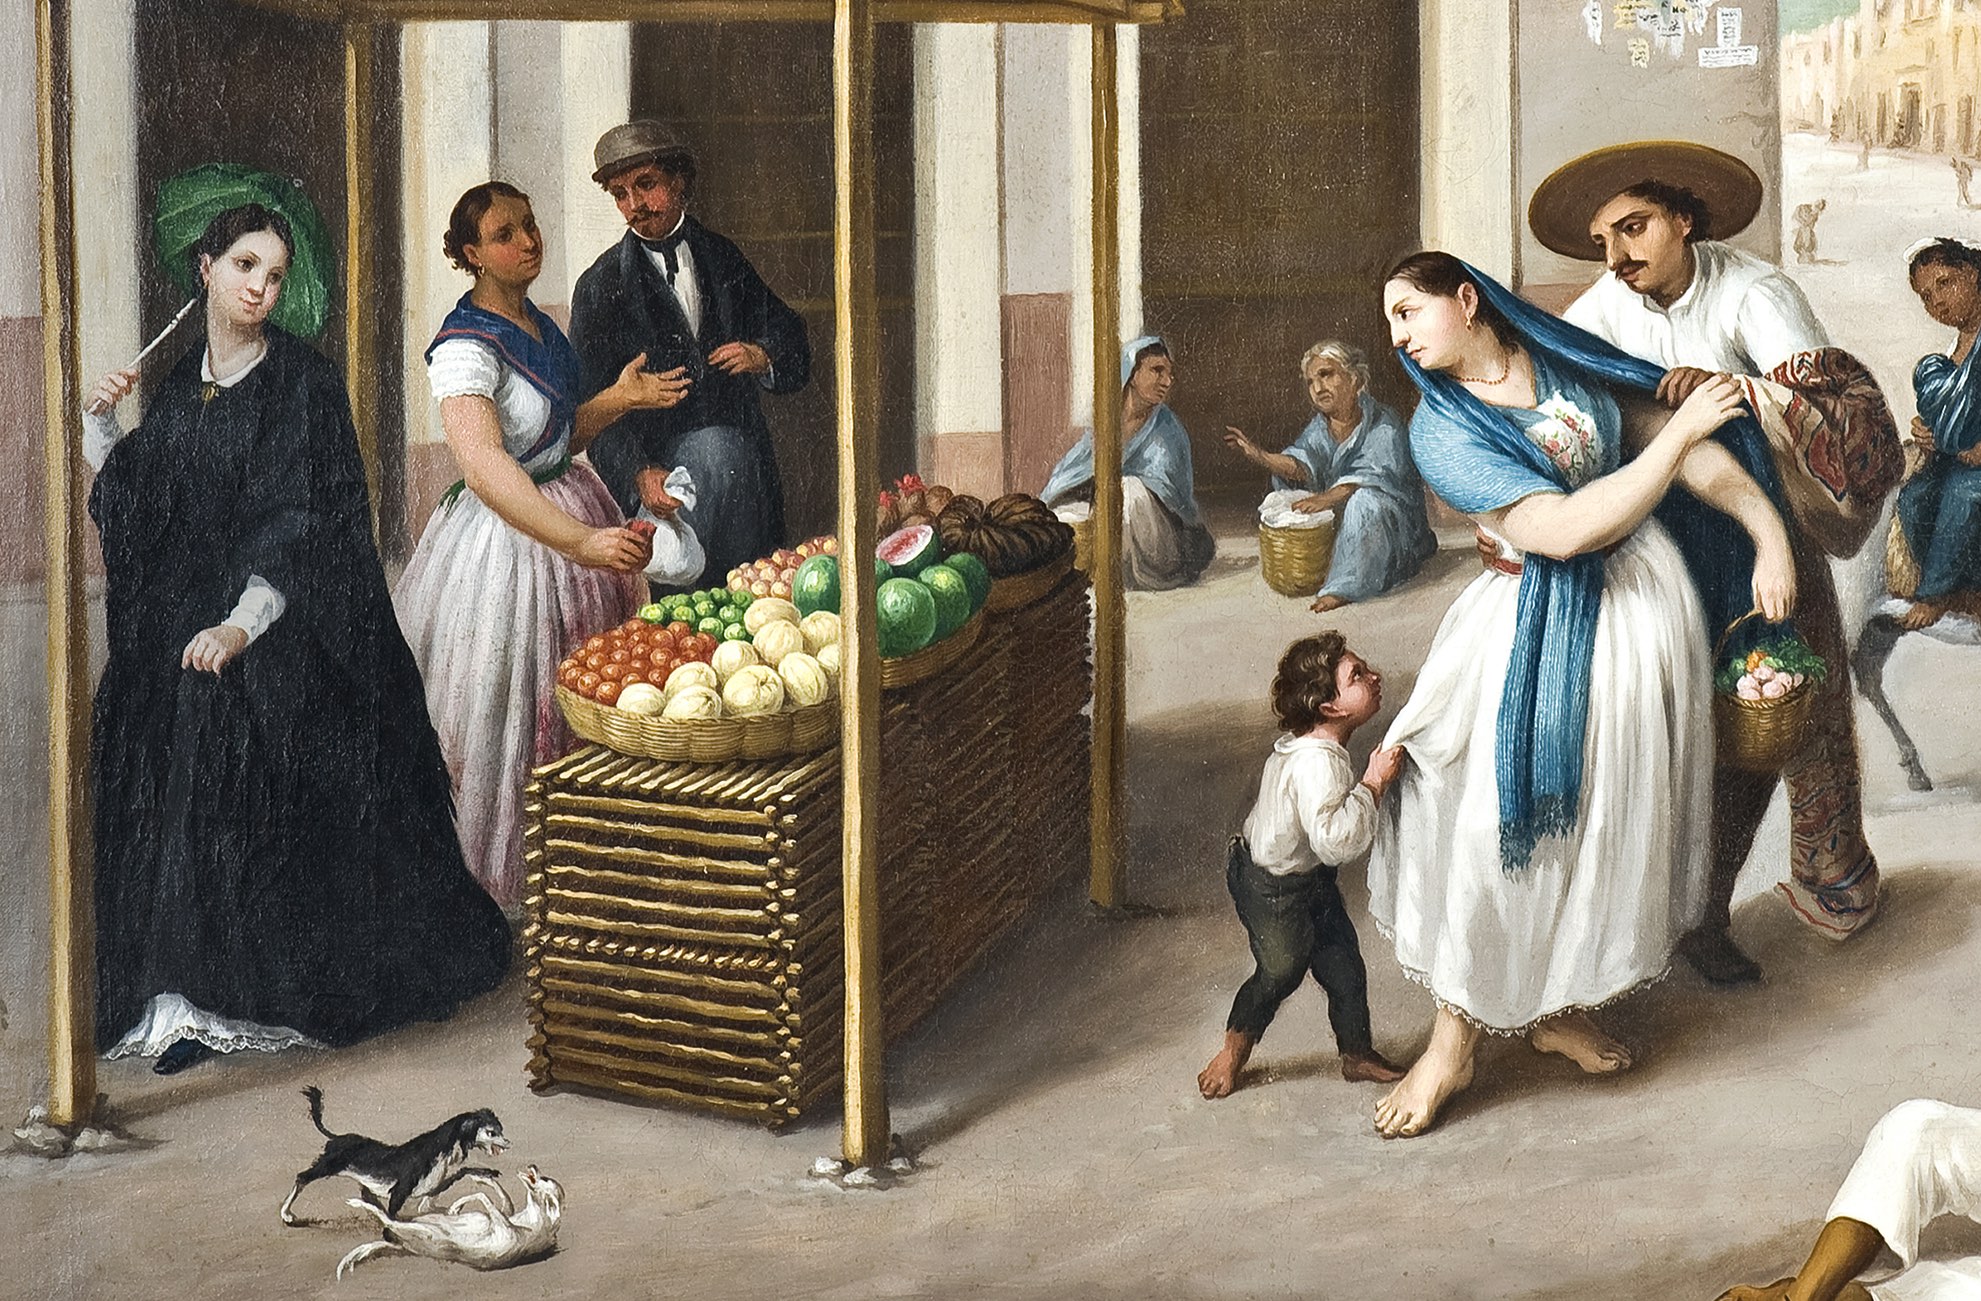 José Agustín Arrieta, La Sorpreza, 1850, oil on canvas, 69.5 x 93 cm (Museo Nacional de Historia, INAH, Mexico City).